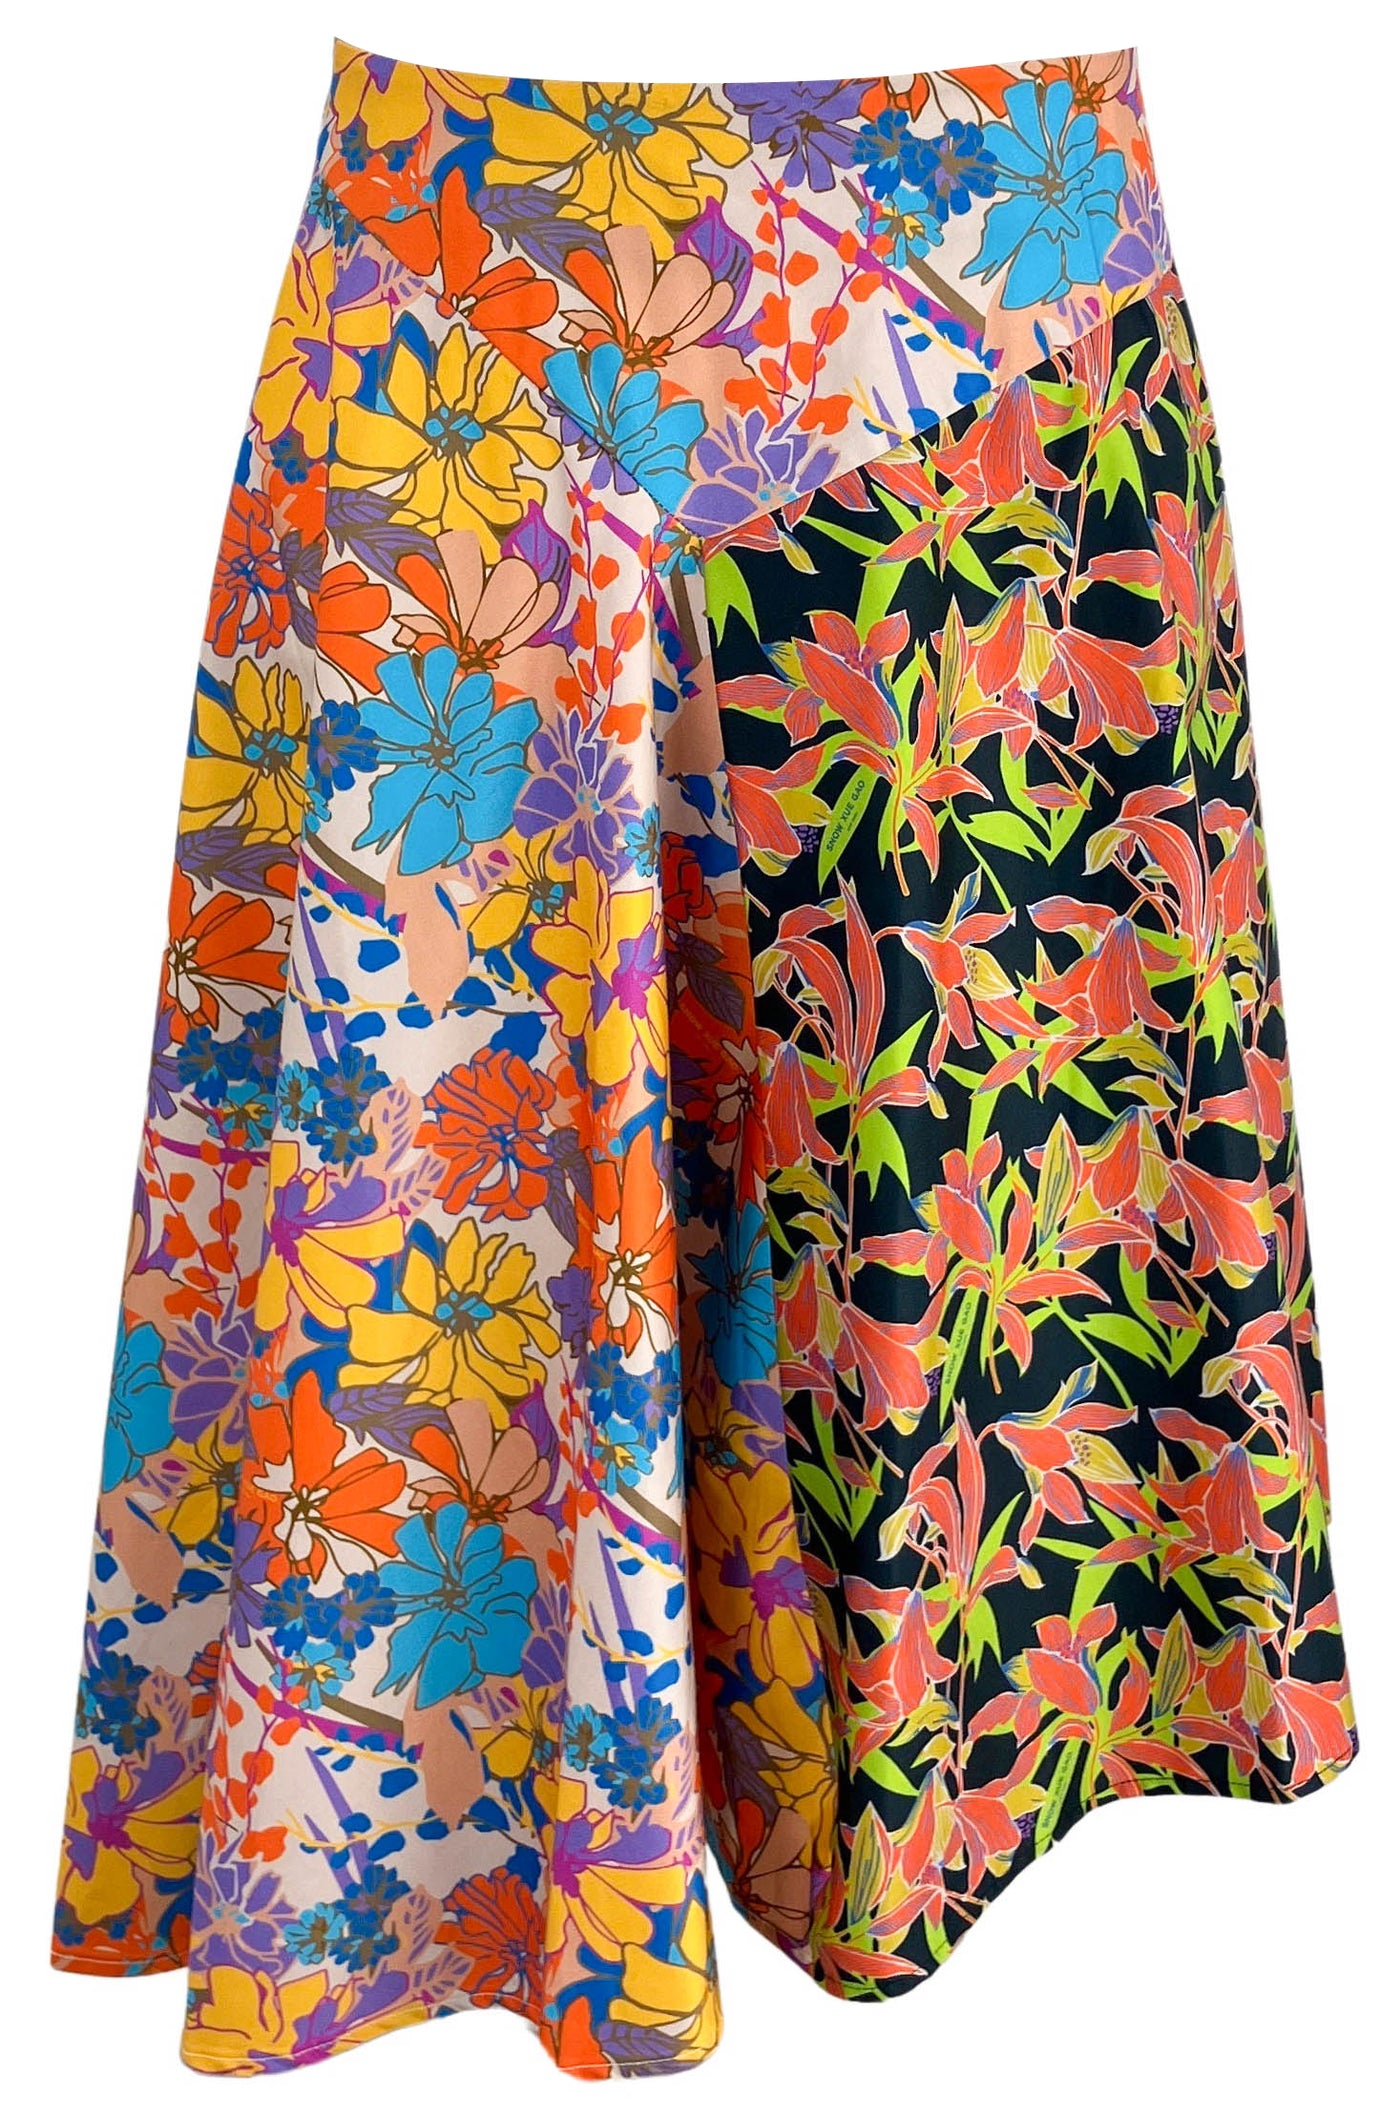 Snow Xue Gao Asymmetric Midi Skirt in Orange Floral - Discounts on Snow Xue Gao at UAL